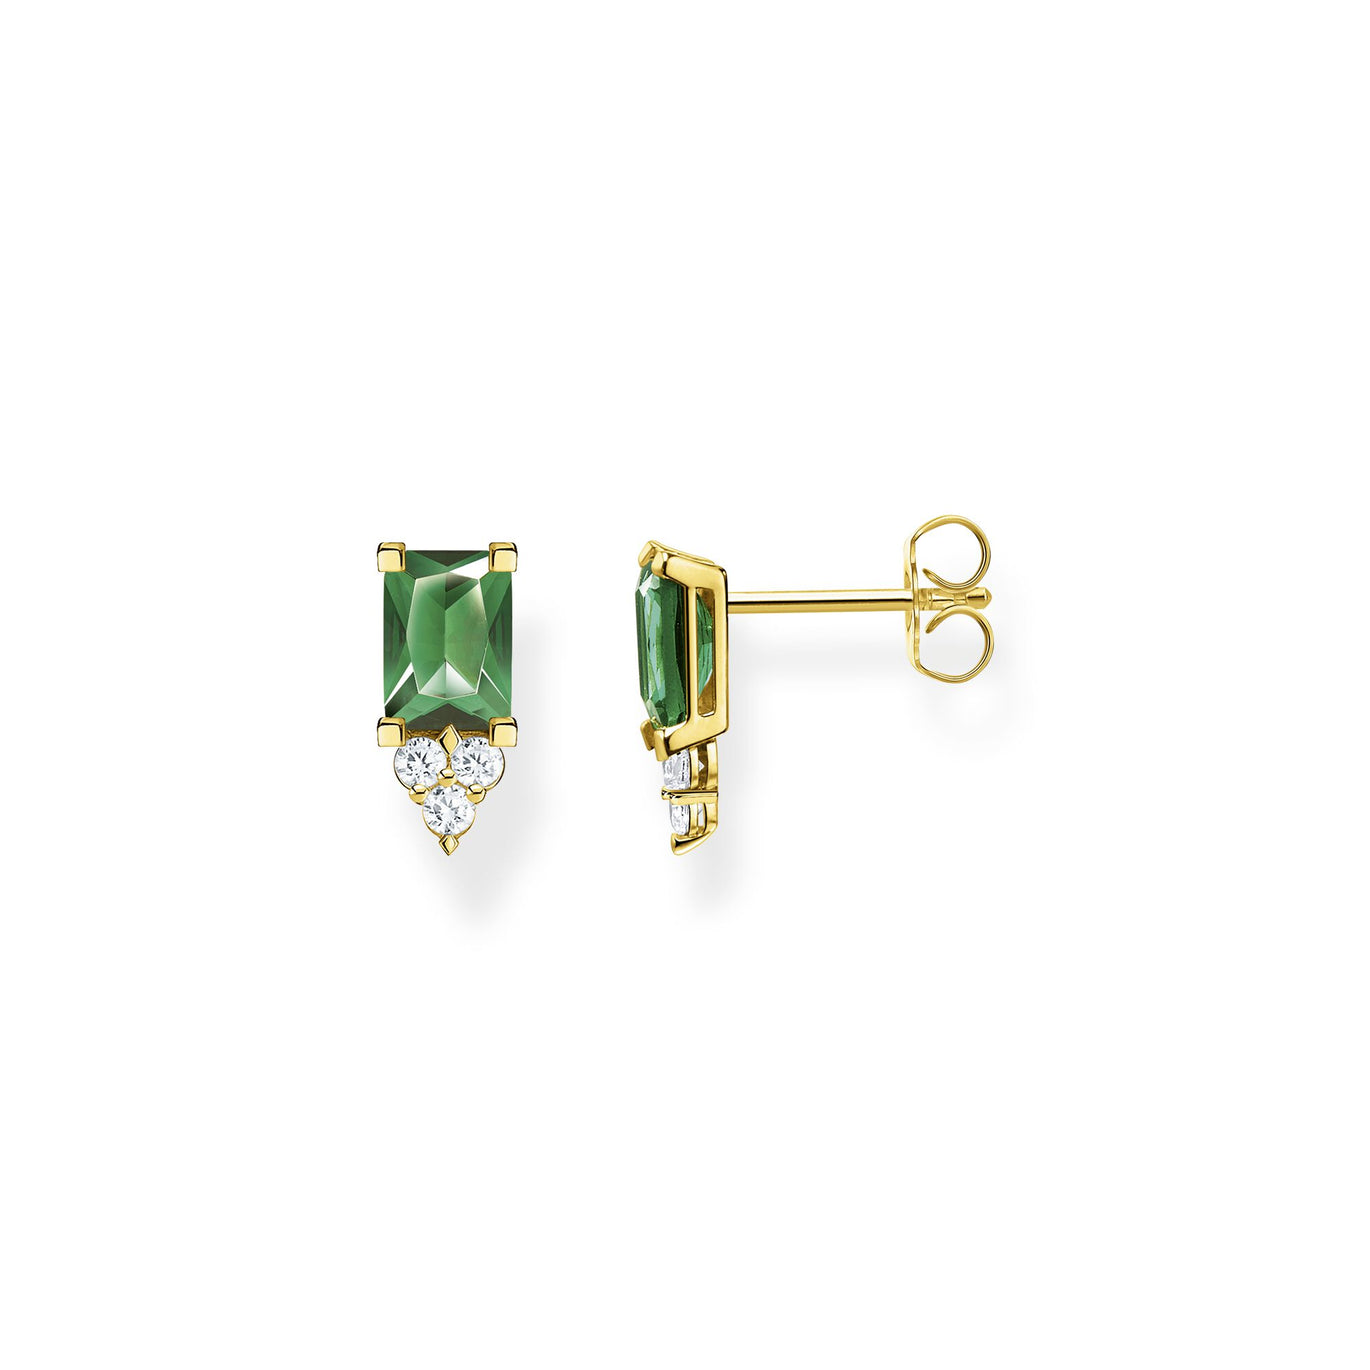 Thomas Sabo Green Stone Stud Earrings